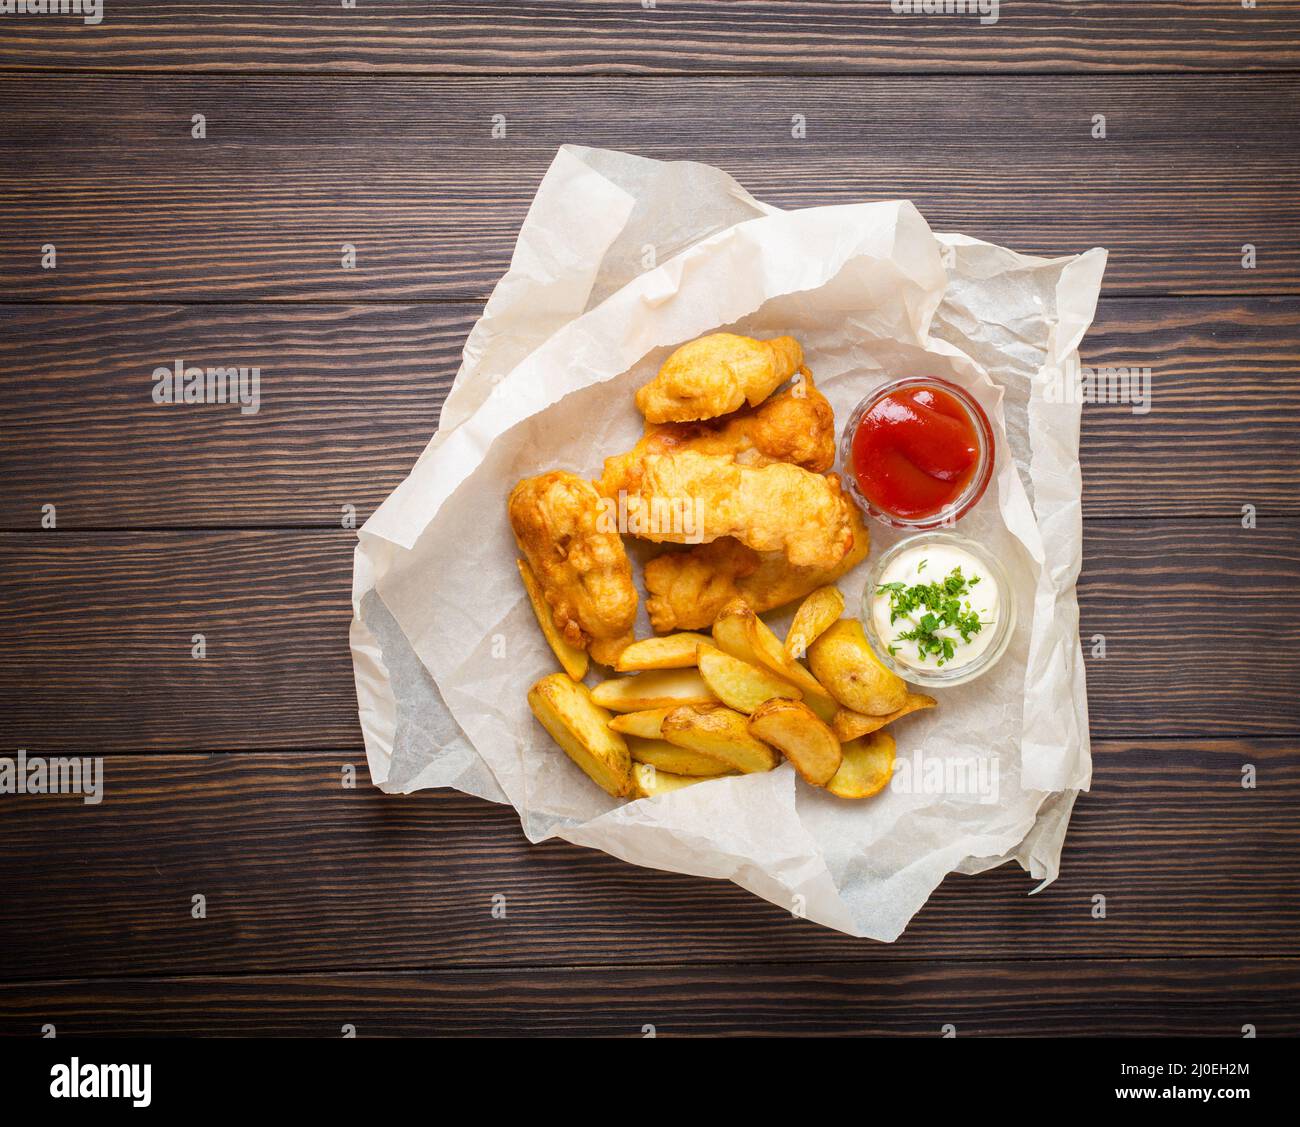 Fish and chips dish Stock Photo